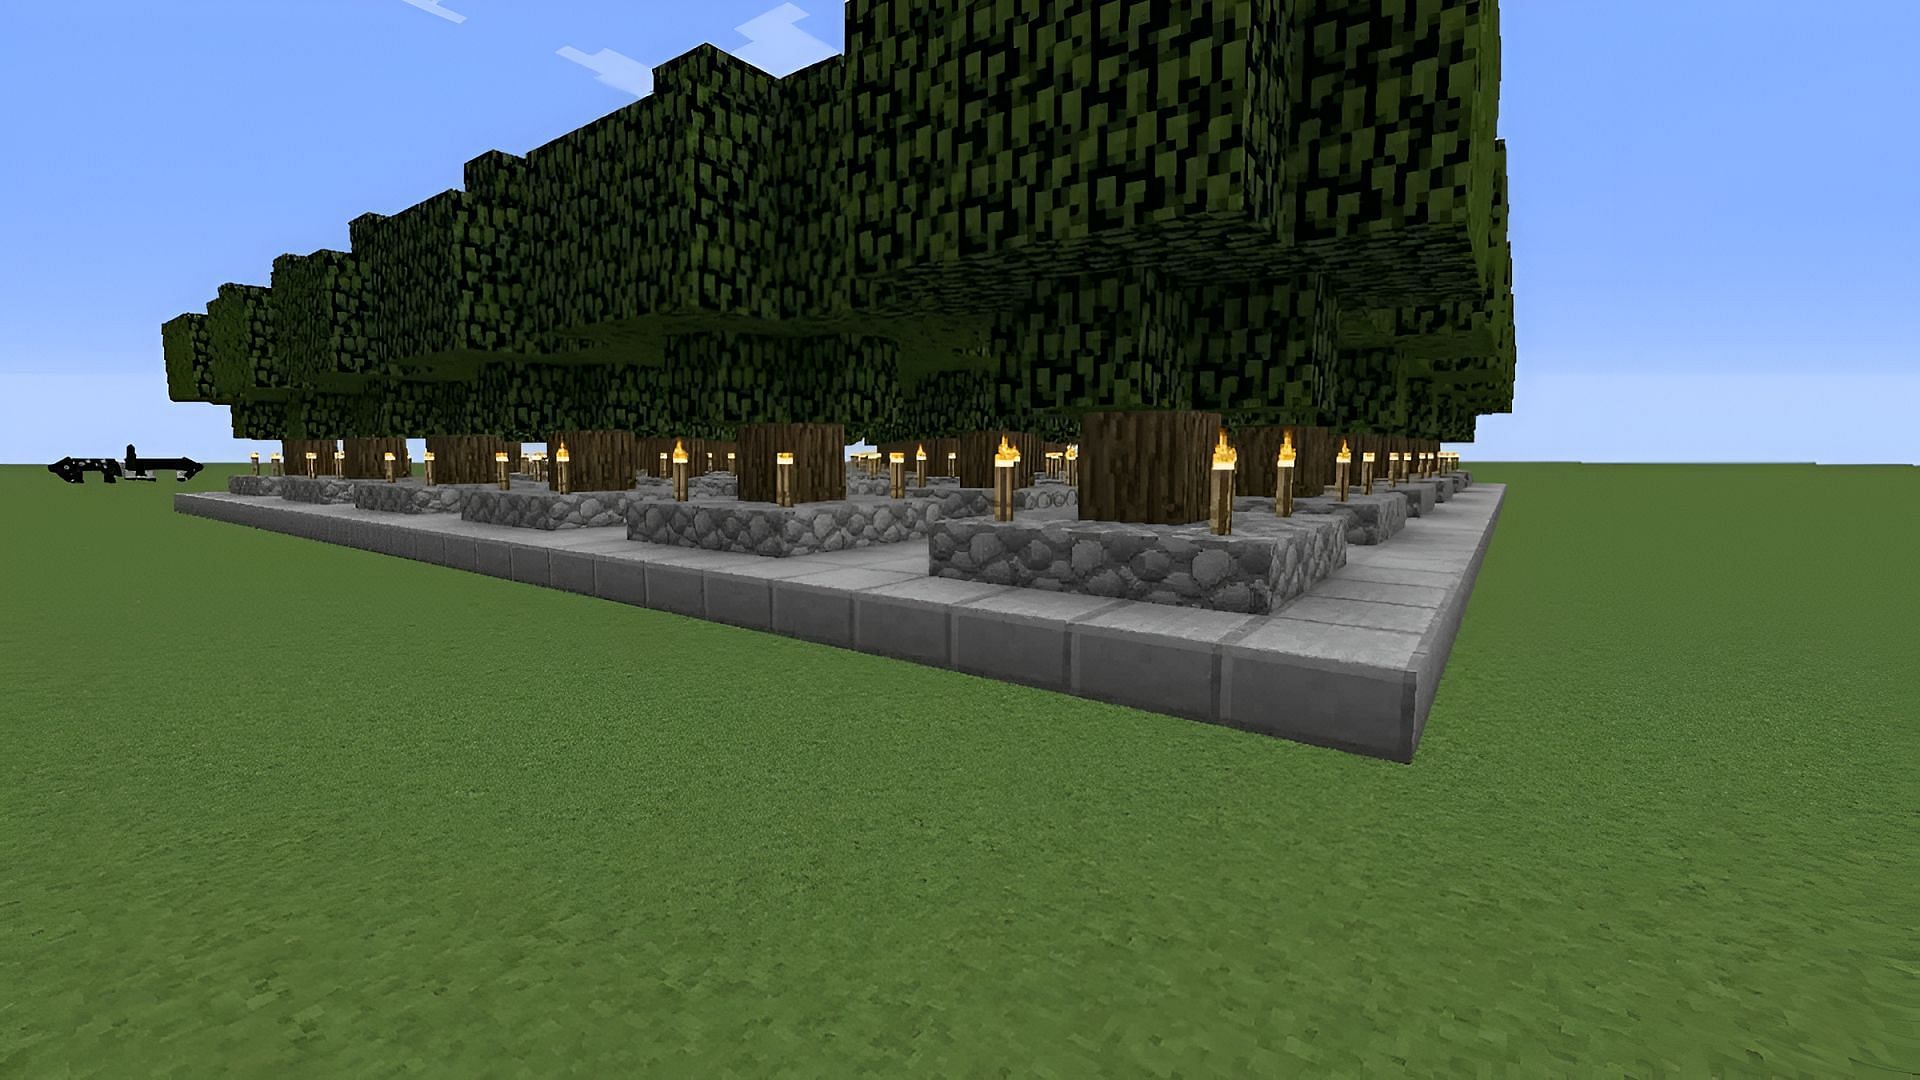 A basic oak tree farm in Minecraft (Image via Mojang)